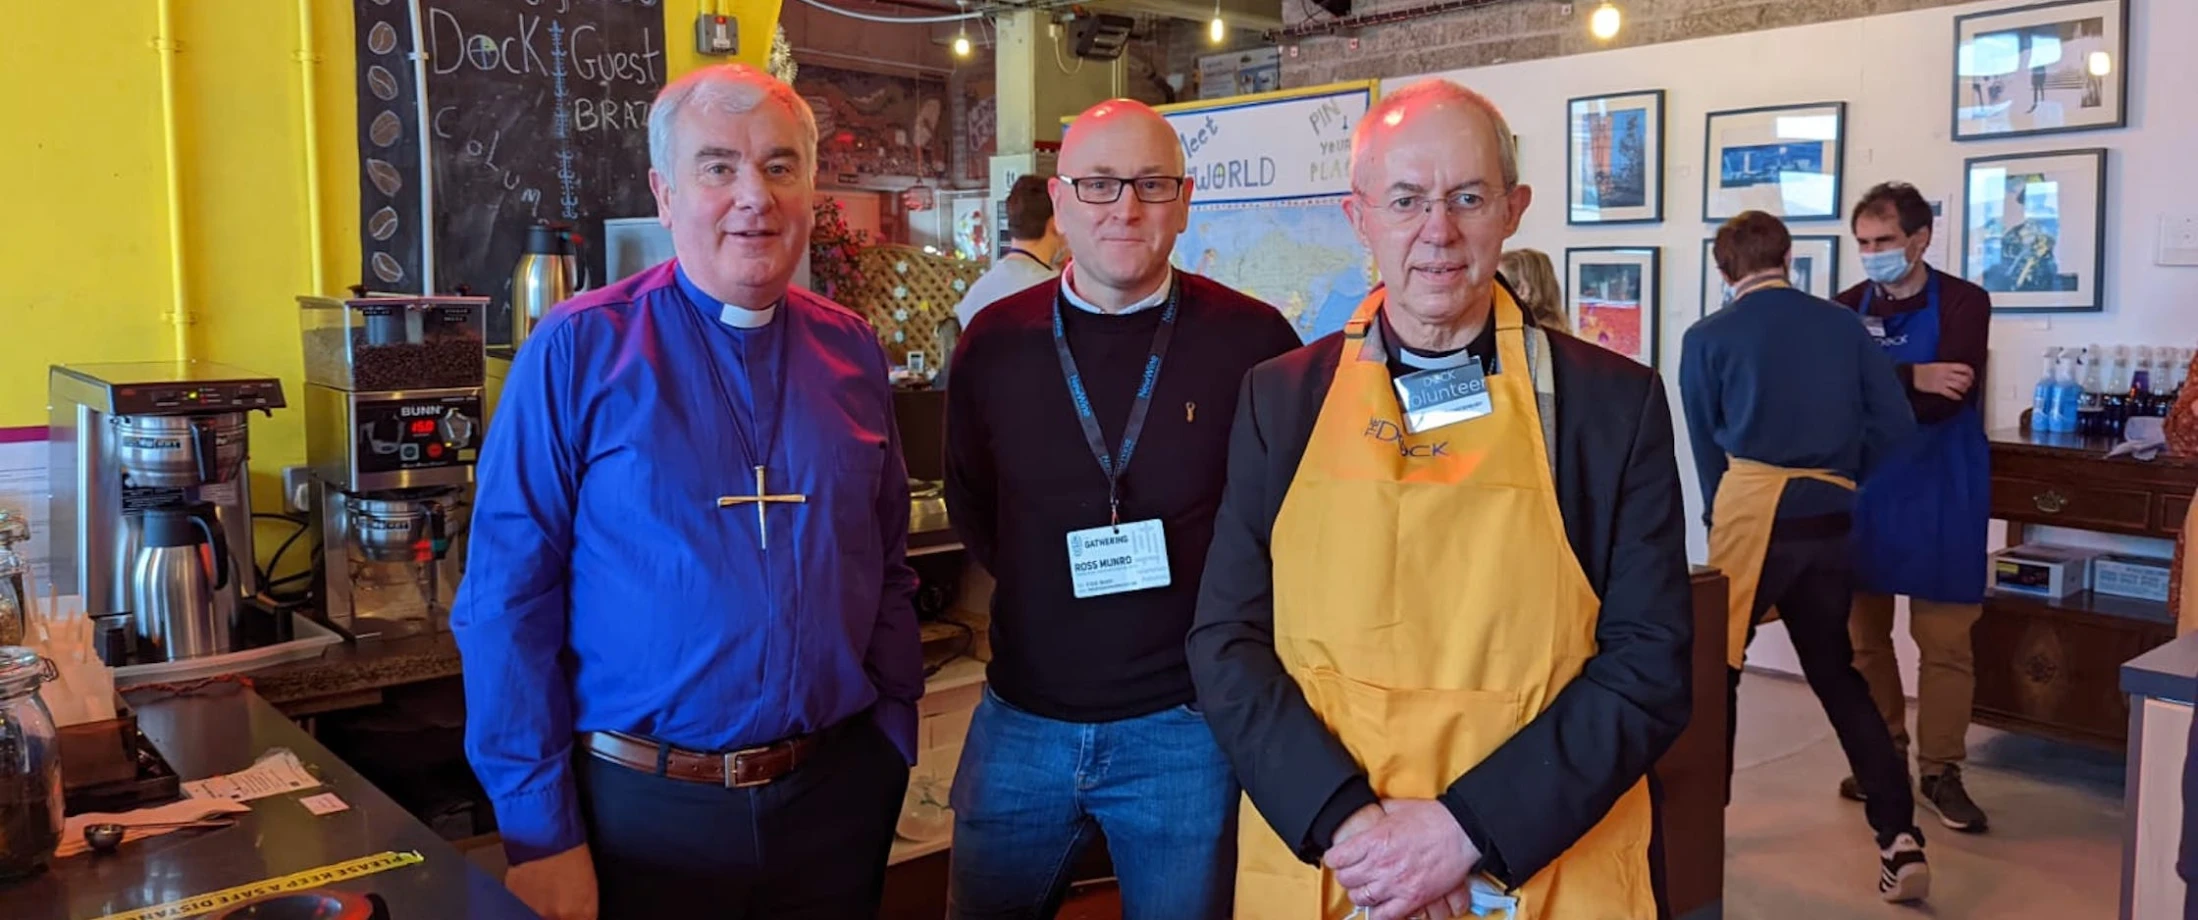 Archbishop Welby visits The DOCK Café